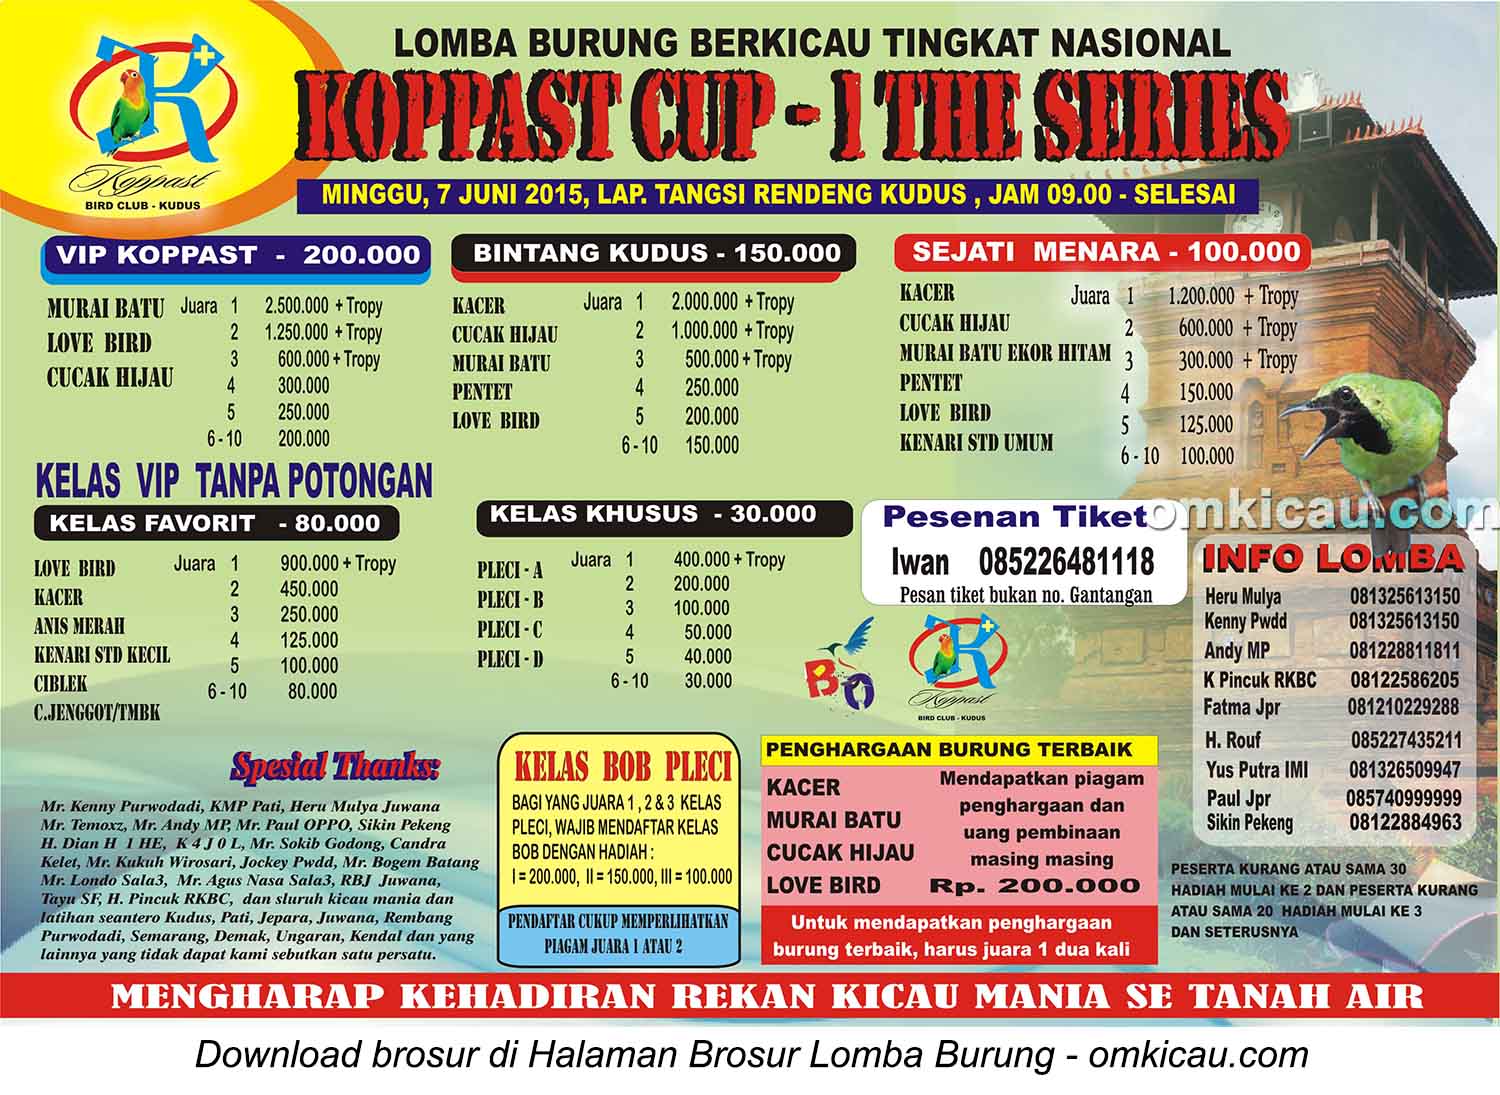 Brosur Lomba Burung Berkicau Koppast Cup - 1 The Series, Kudus, 7 Juni 2015